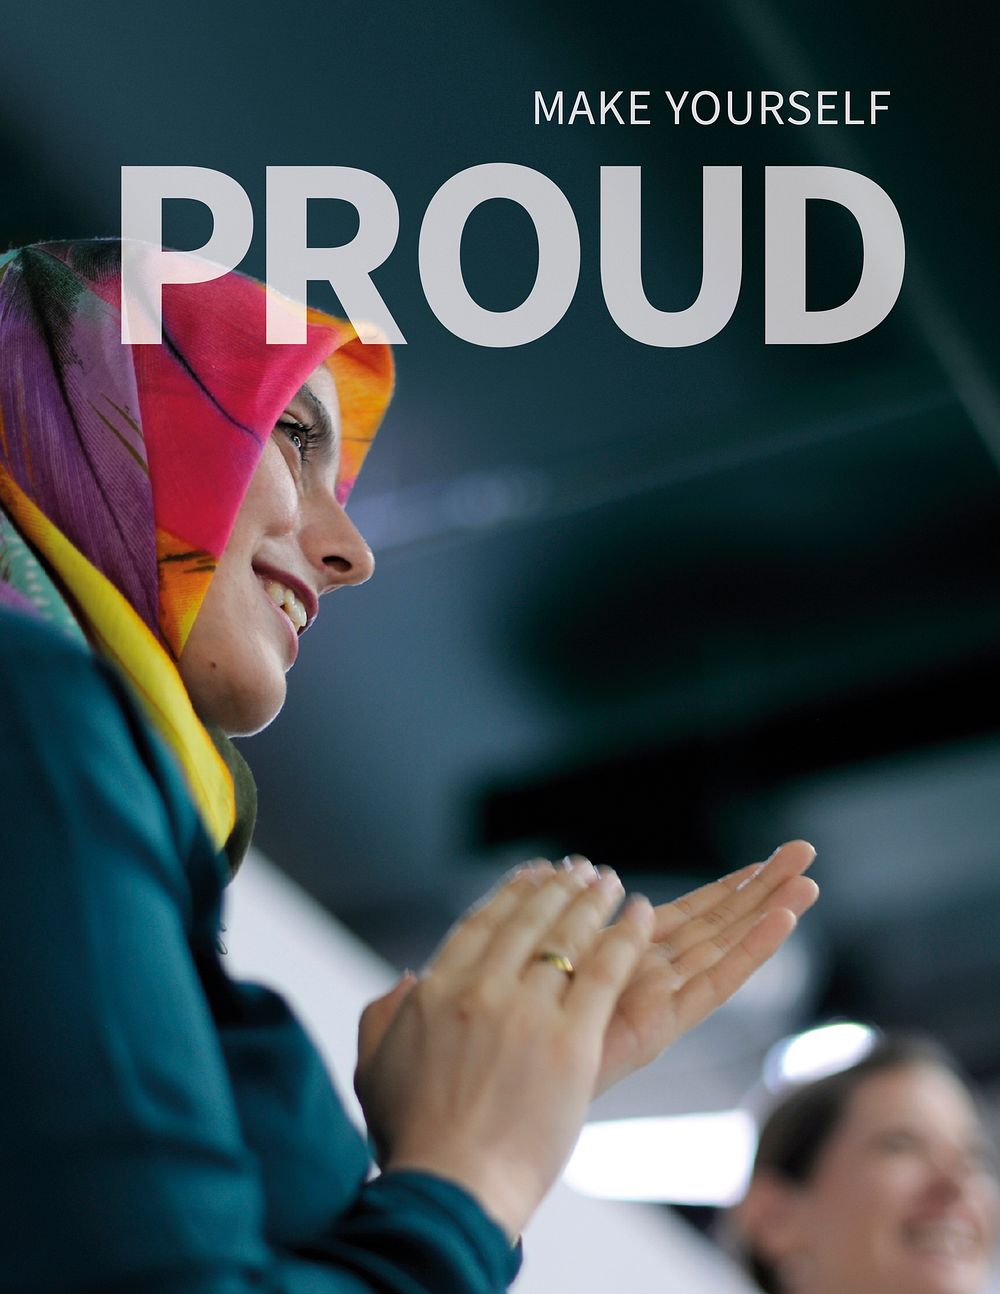 Women empowerment career with muslim ambassador inspirational quote make yourself proud